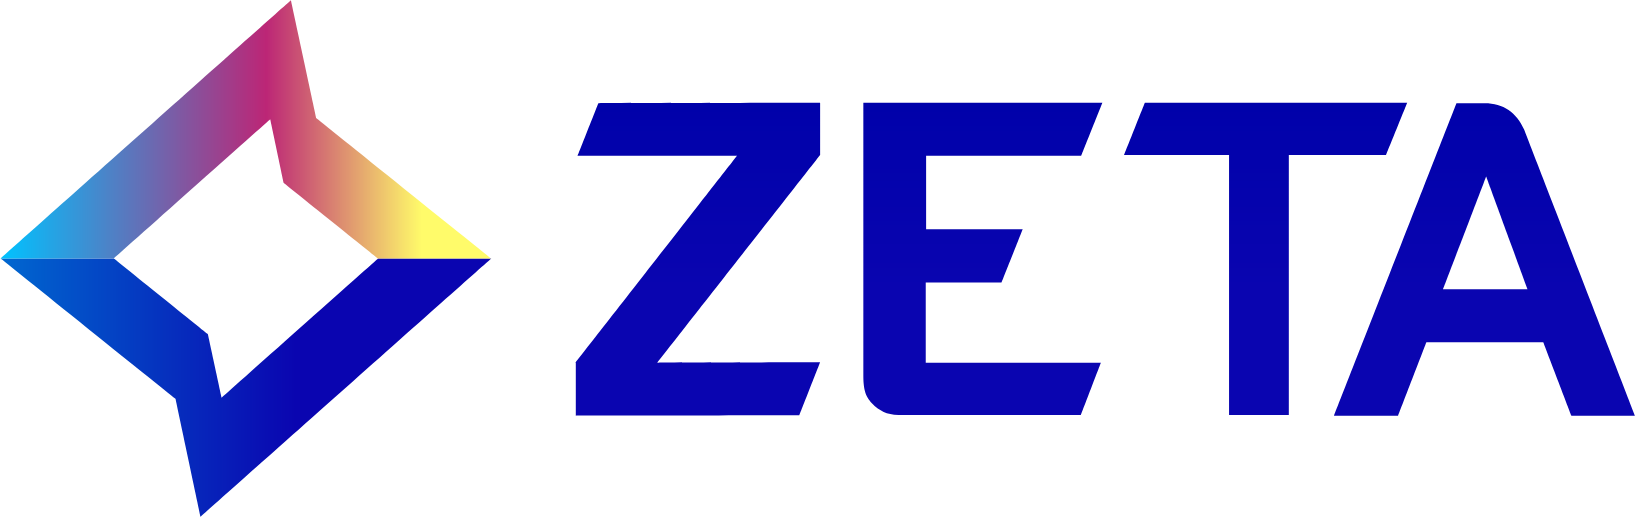 Zeta Global logo large (transparent PNG)